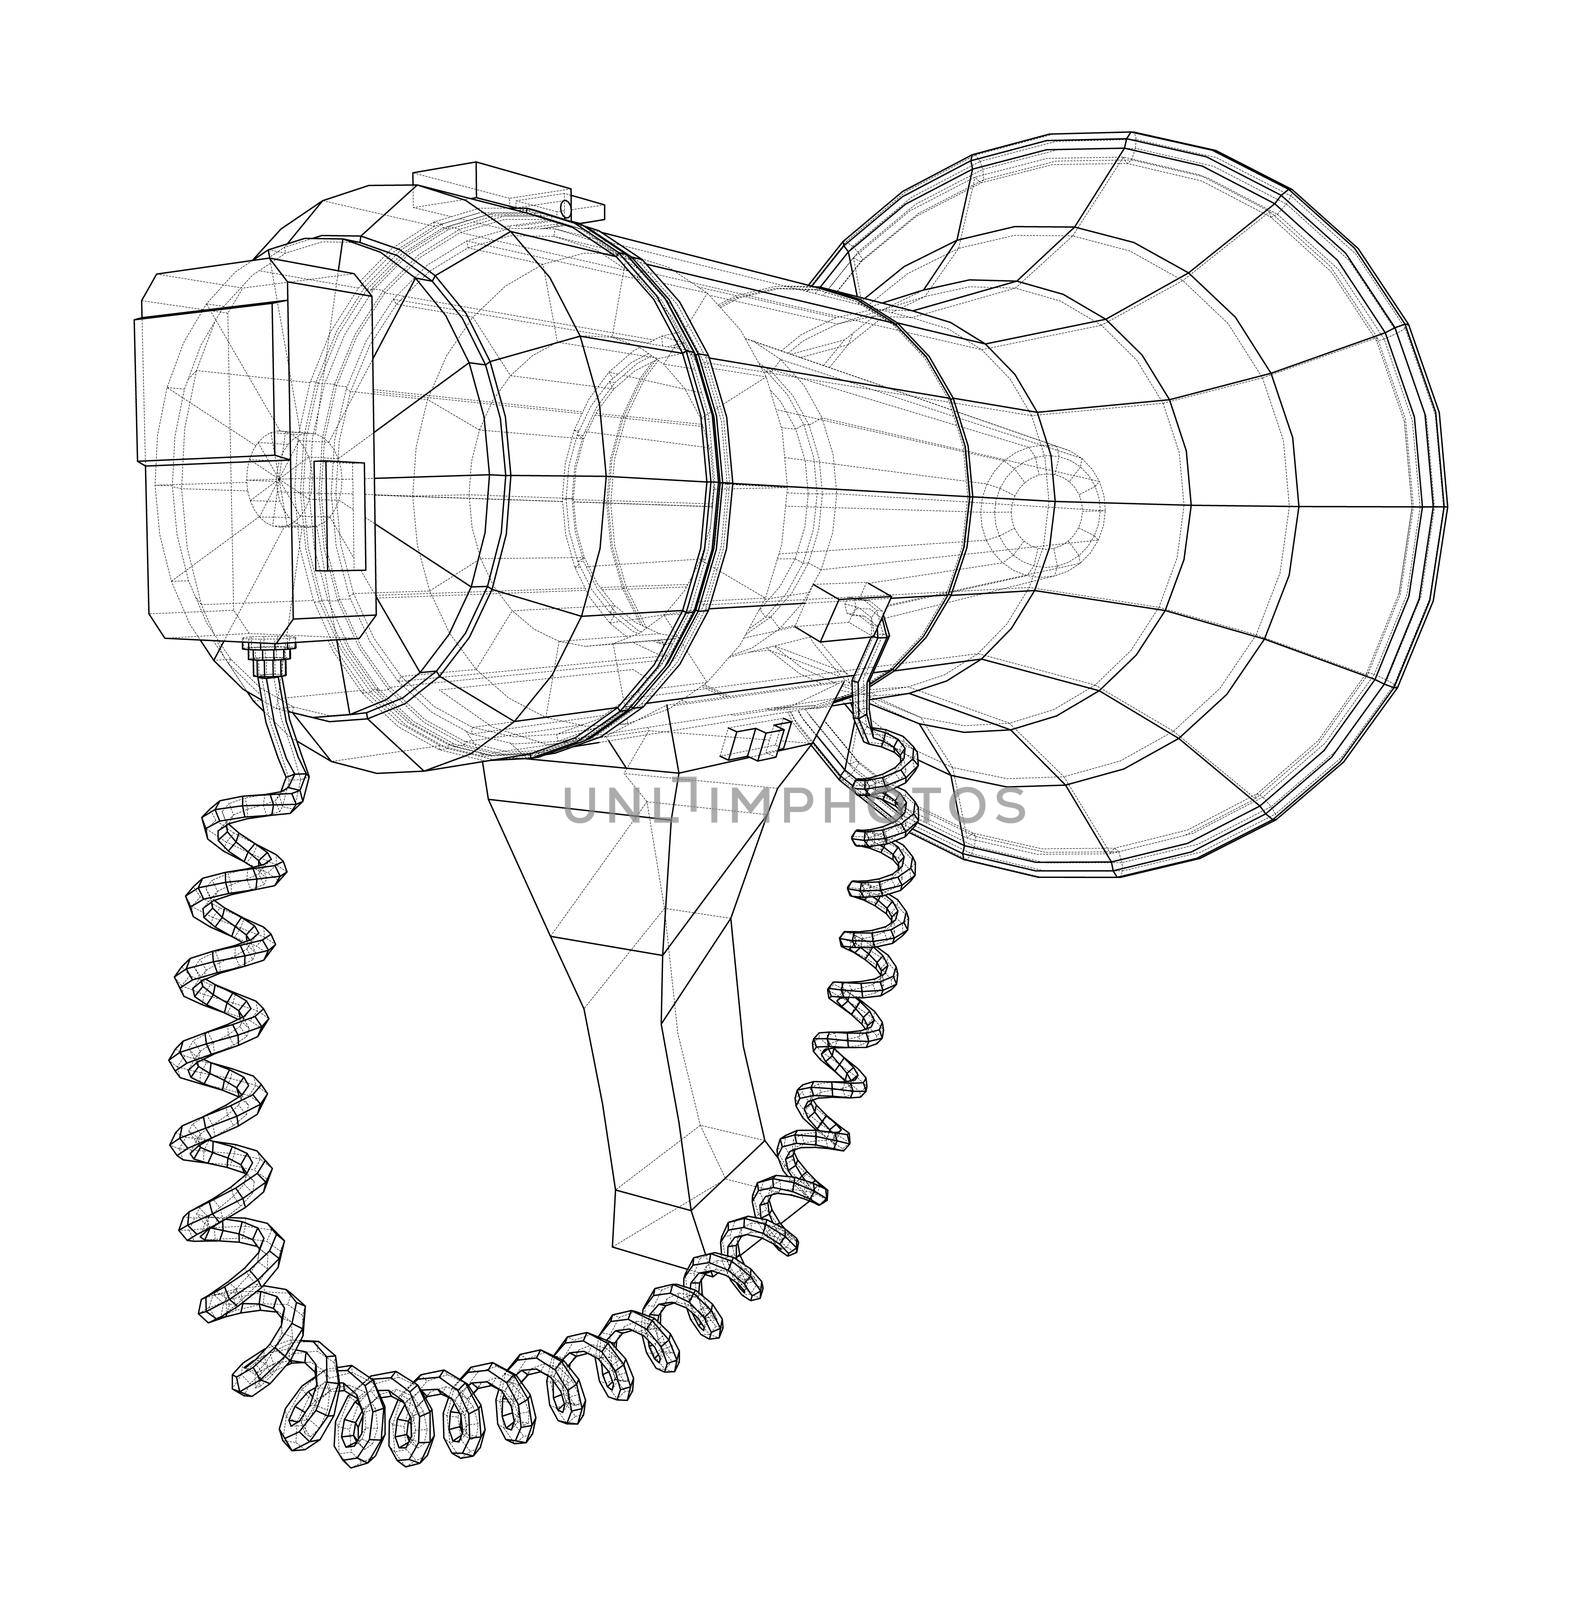 Megaphone concept outline. 3d illustration by cherezoff